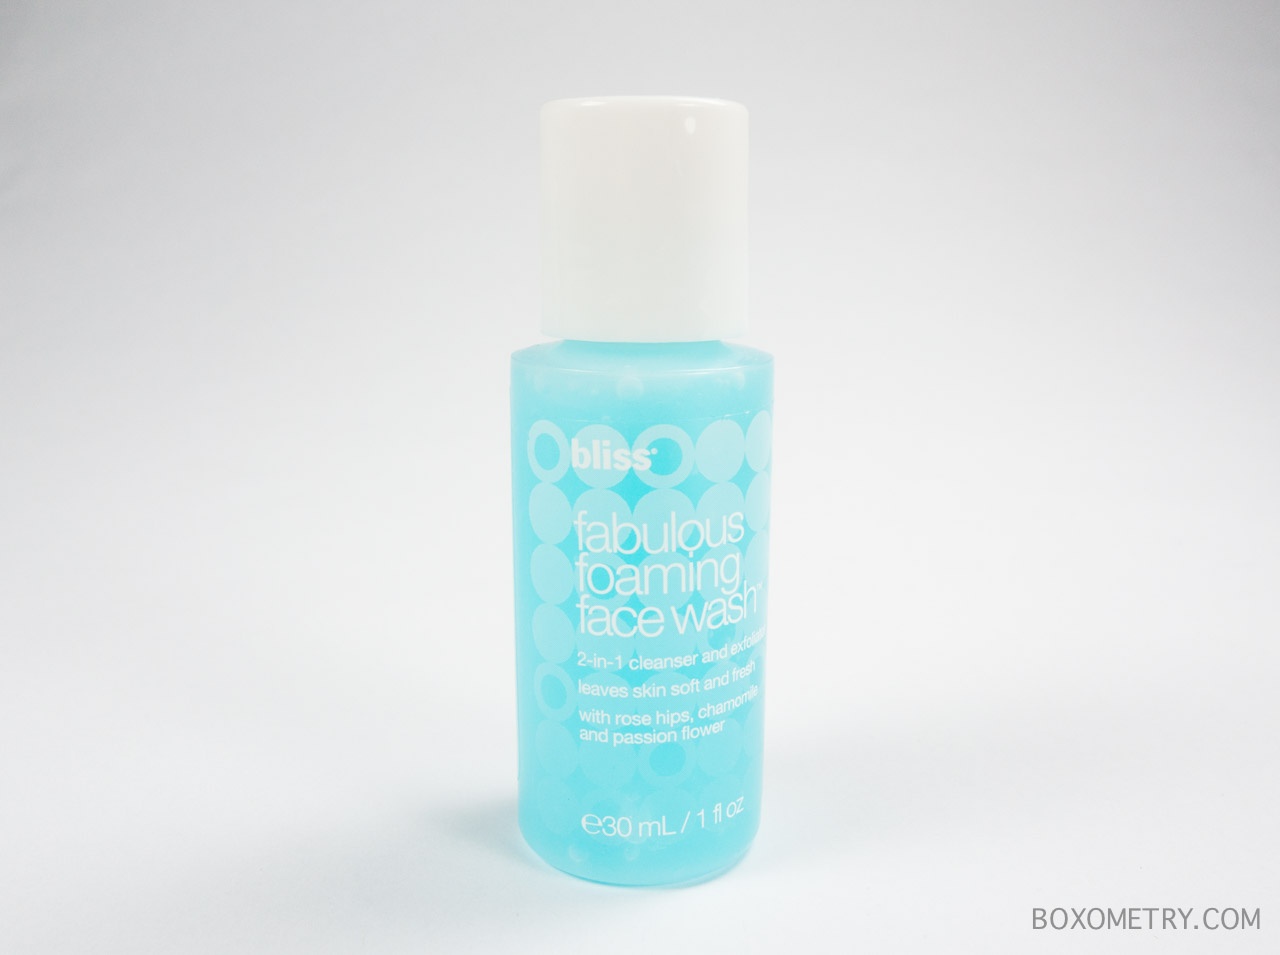 Boxometry Look Fantastic Beauty Box September Review - Bliss Fabulous Foaming Face Wash